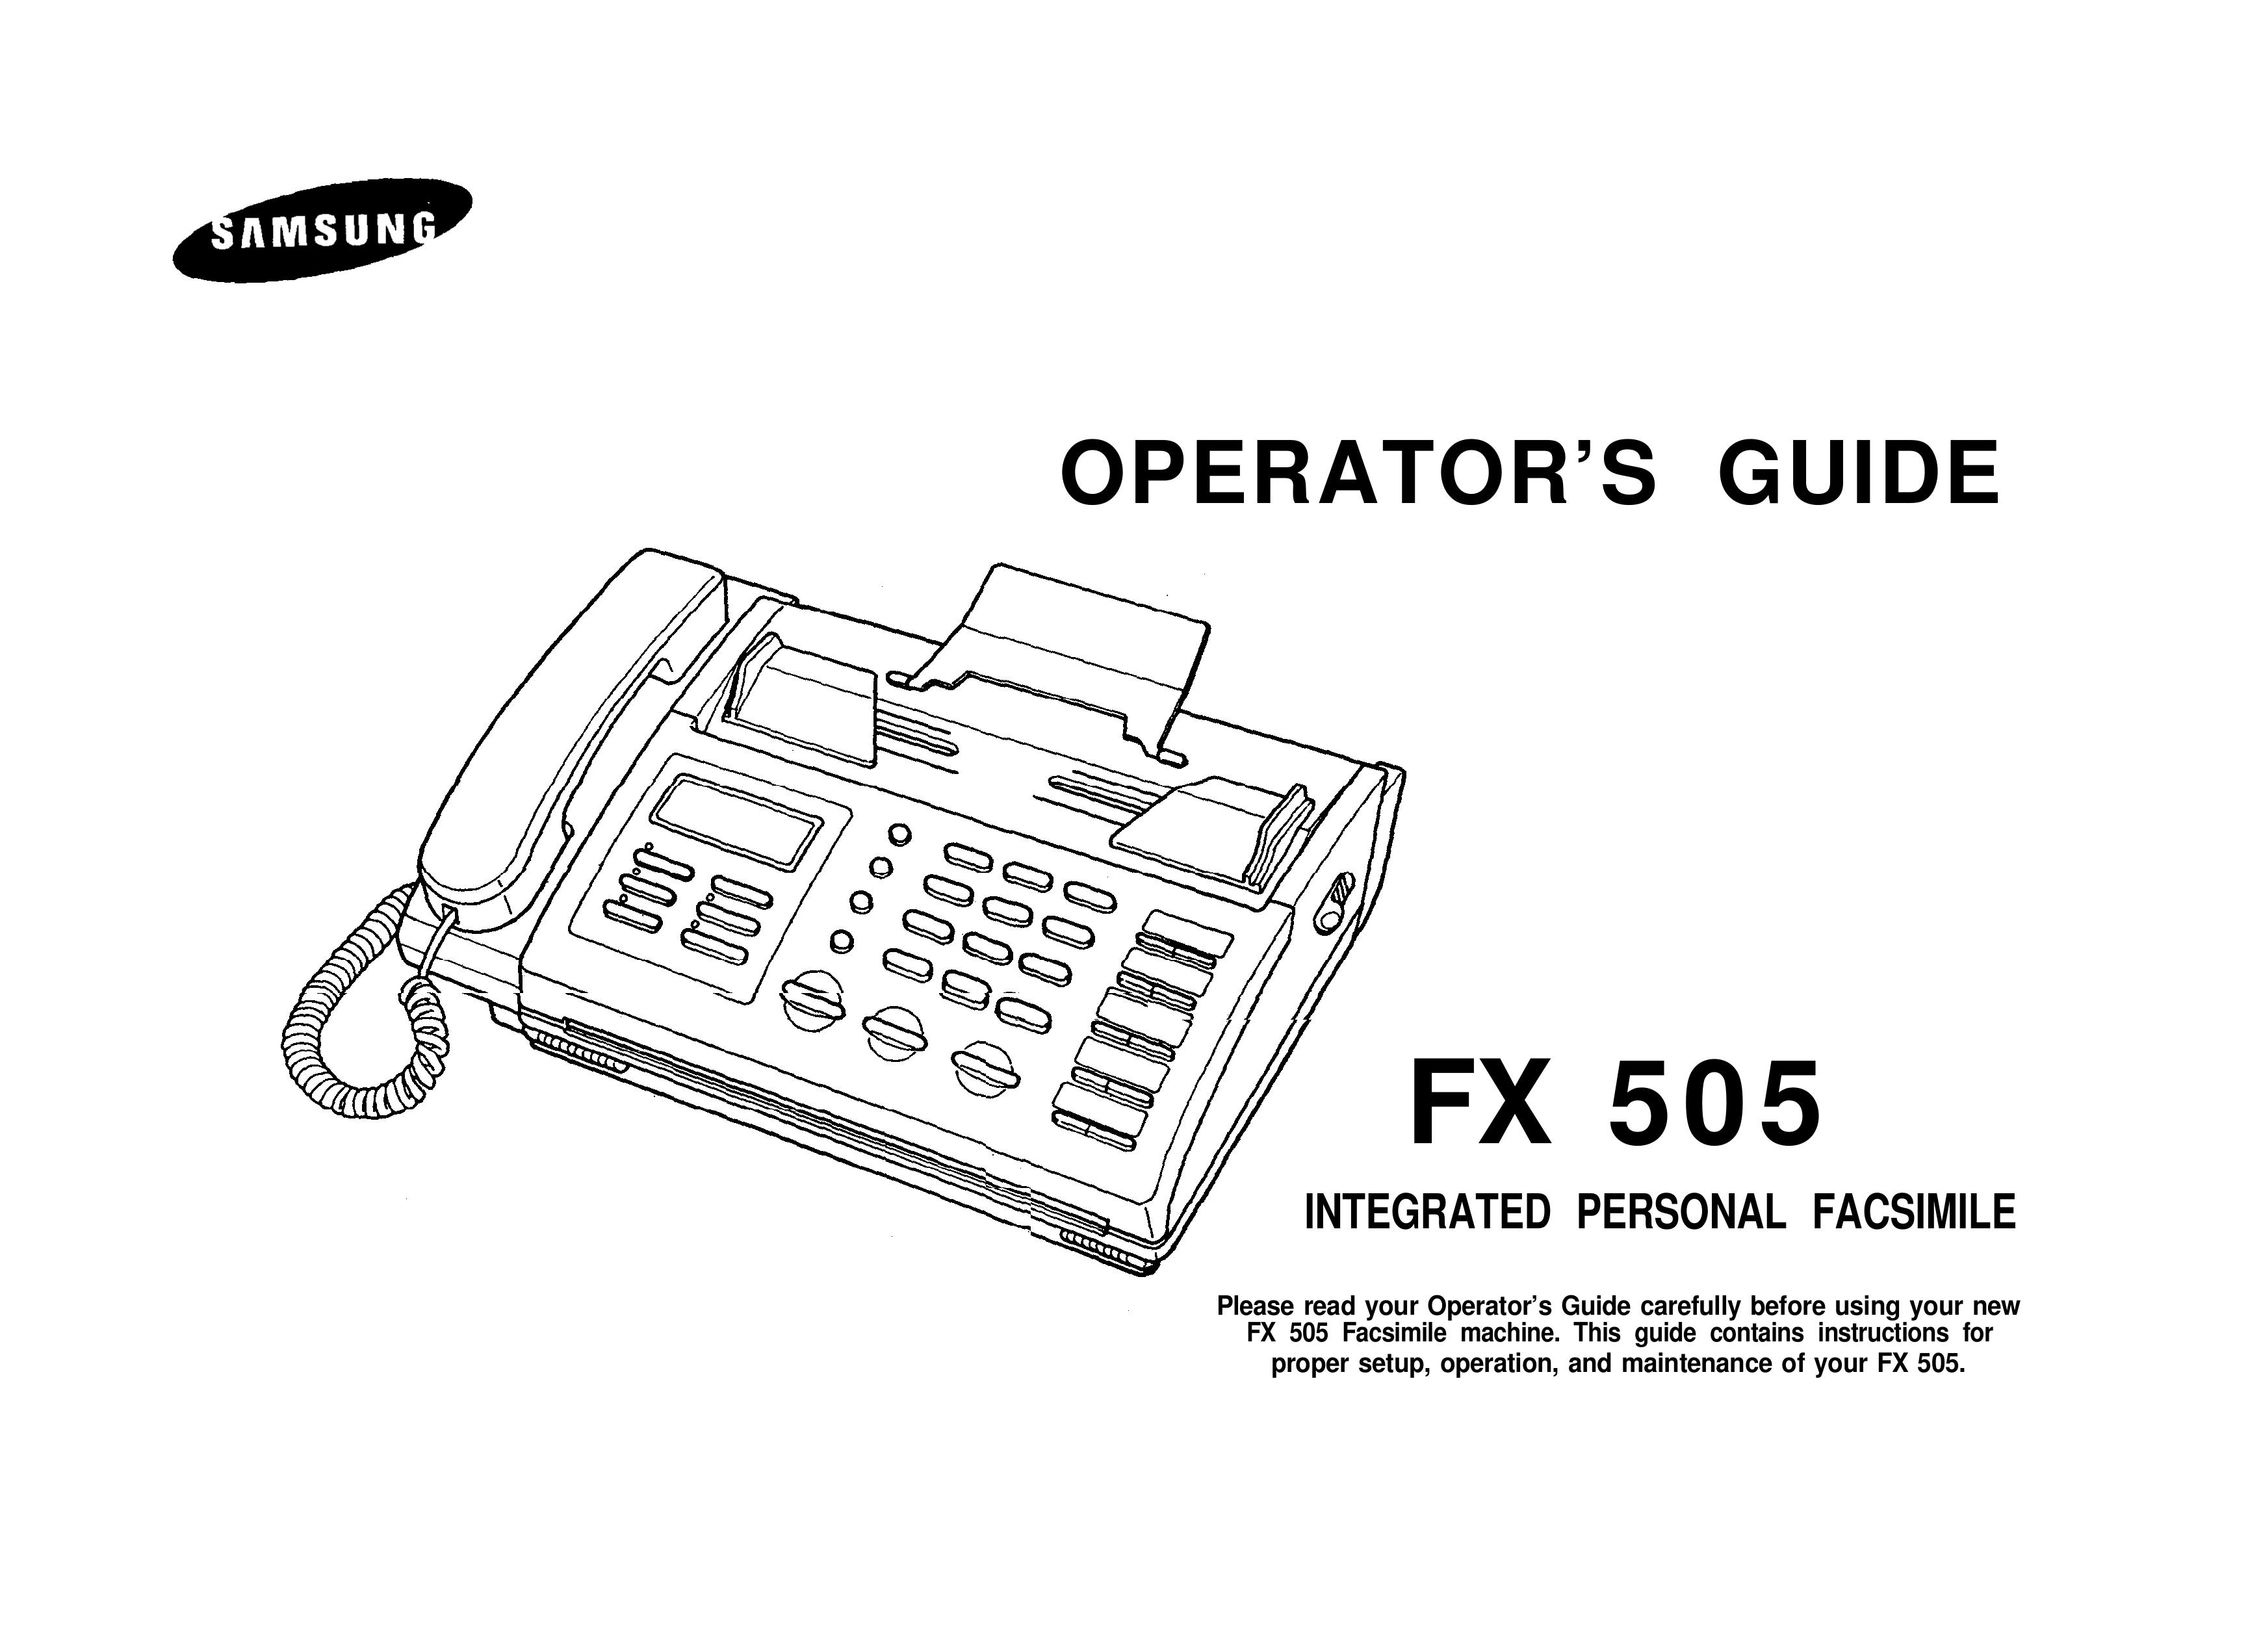 Samsung FX 505 Fax Machine User Manual